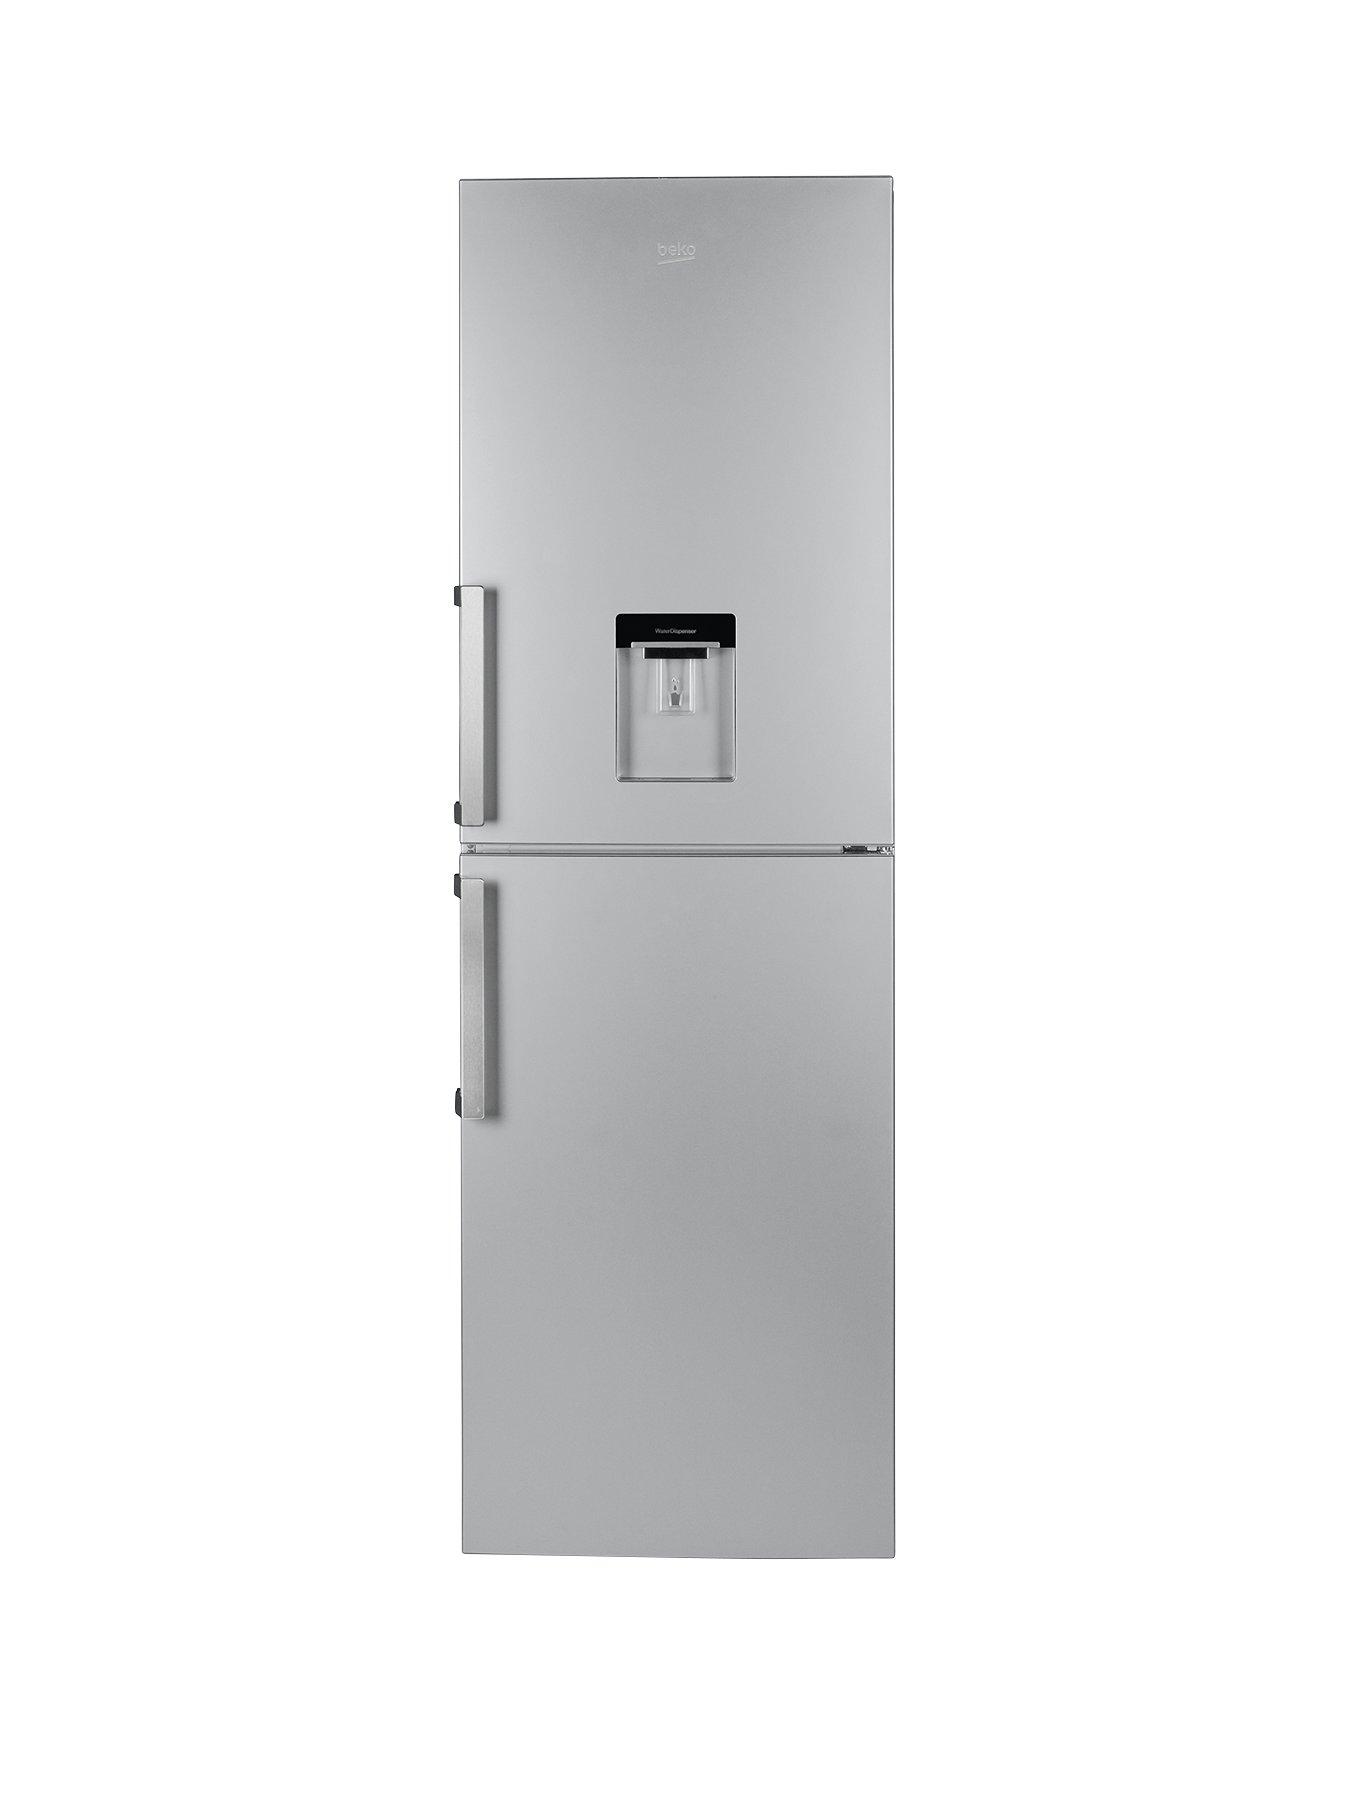 Beko Cfp1691Ds 60Cm Frost Free Fridge Freezer With Water Dispenser – Silver